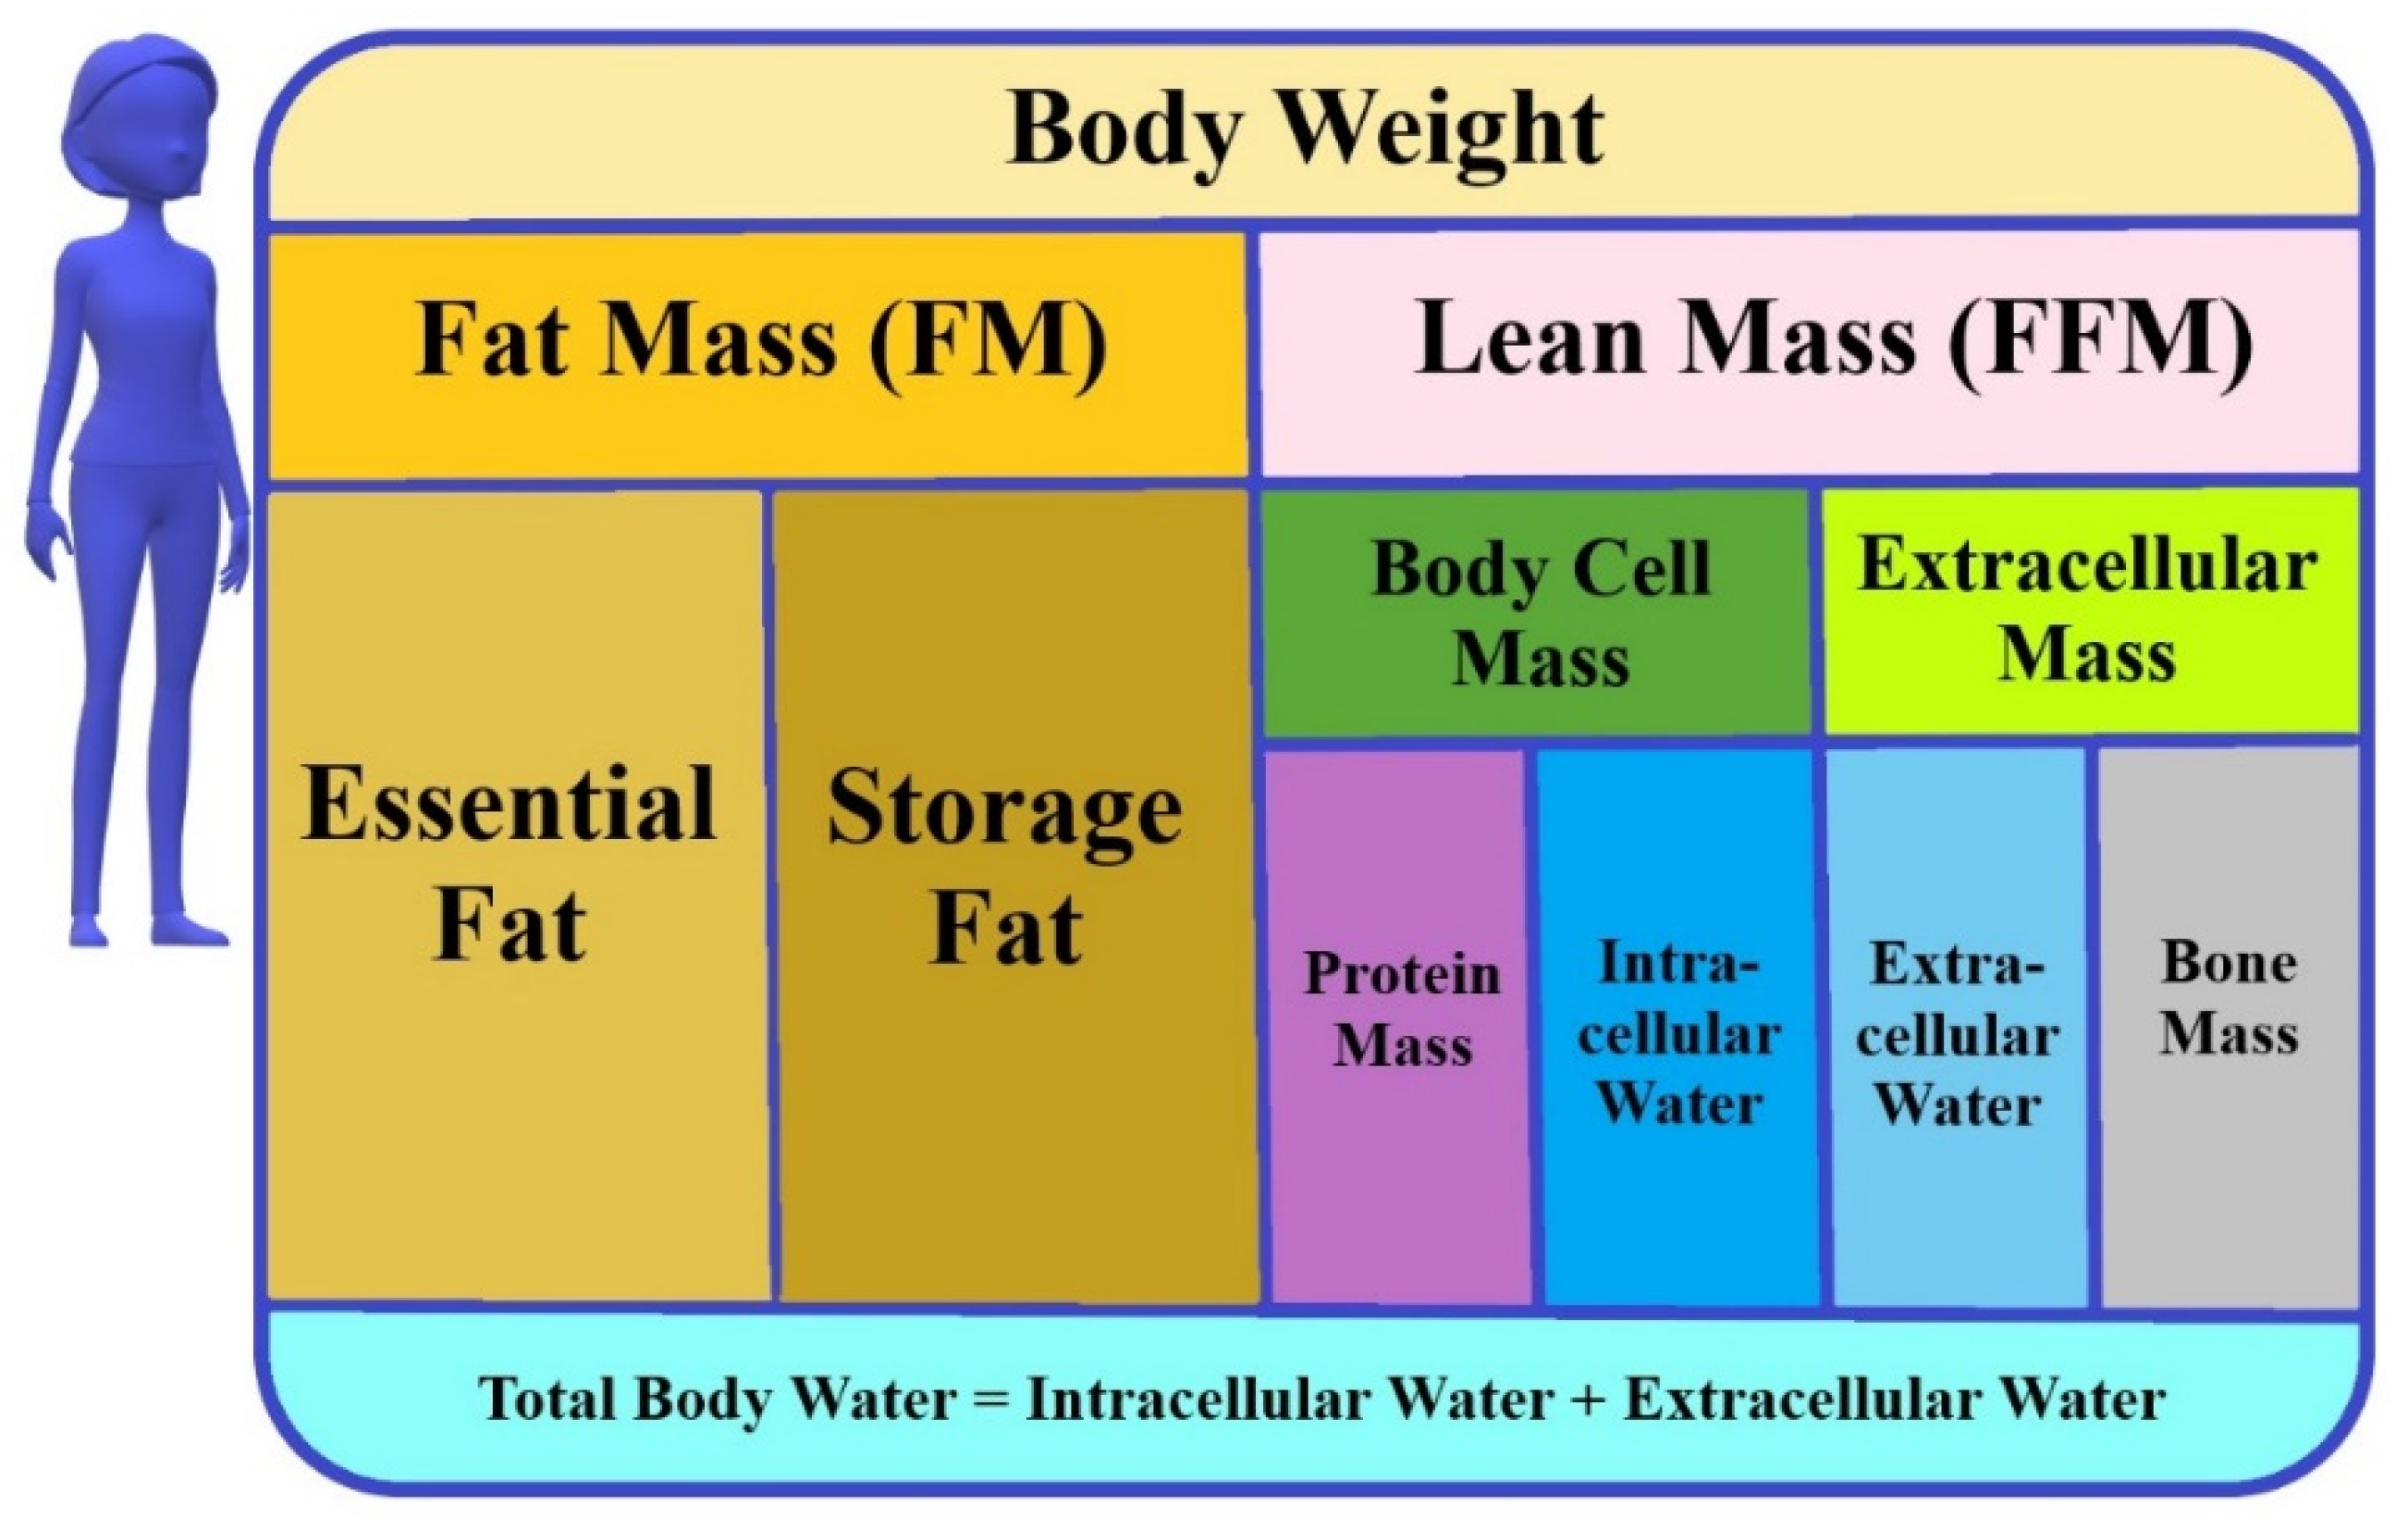 BMI vs Body Composition Analysis